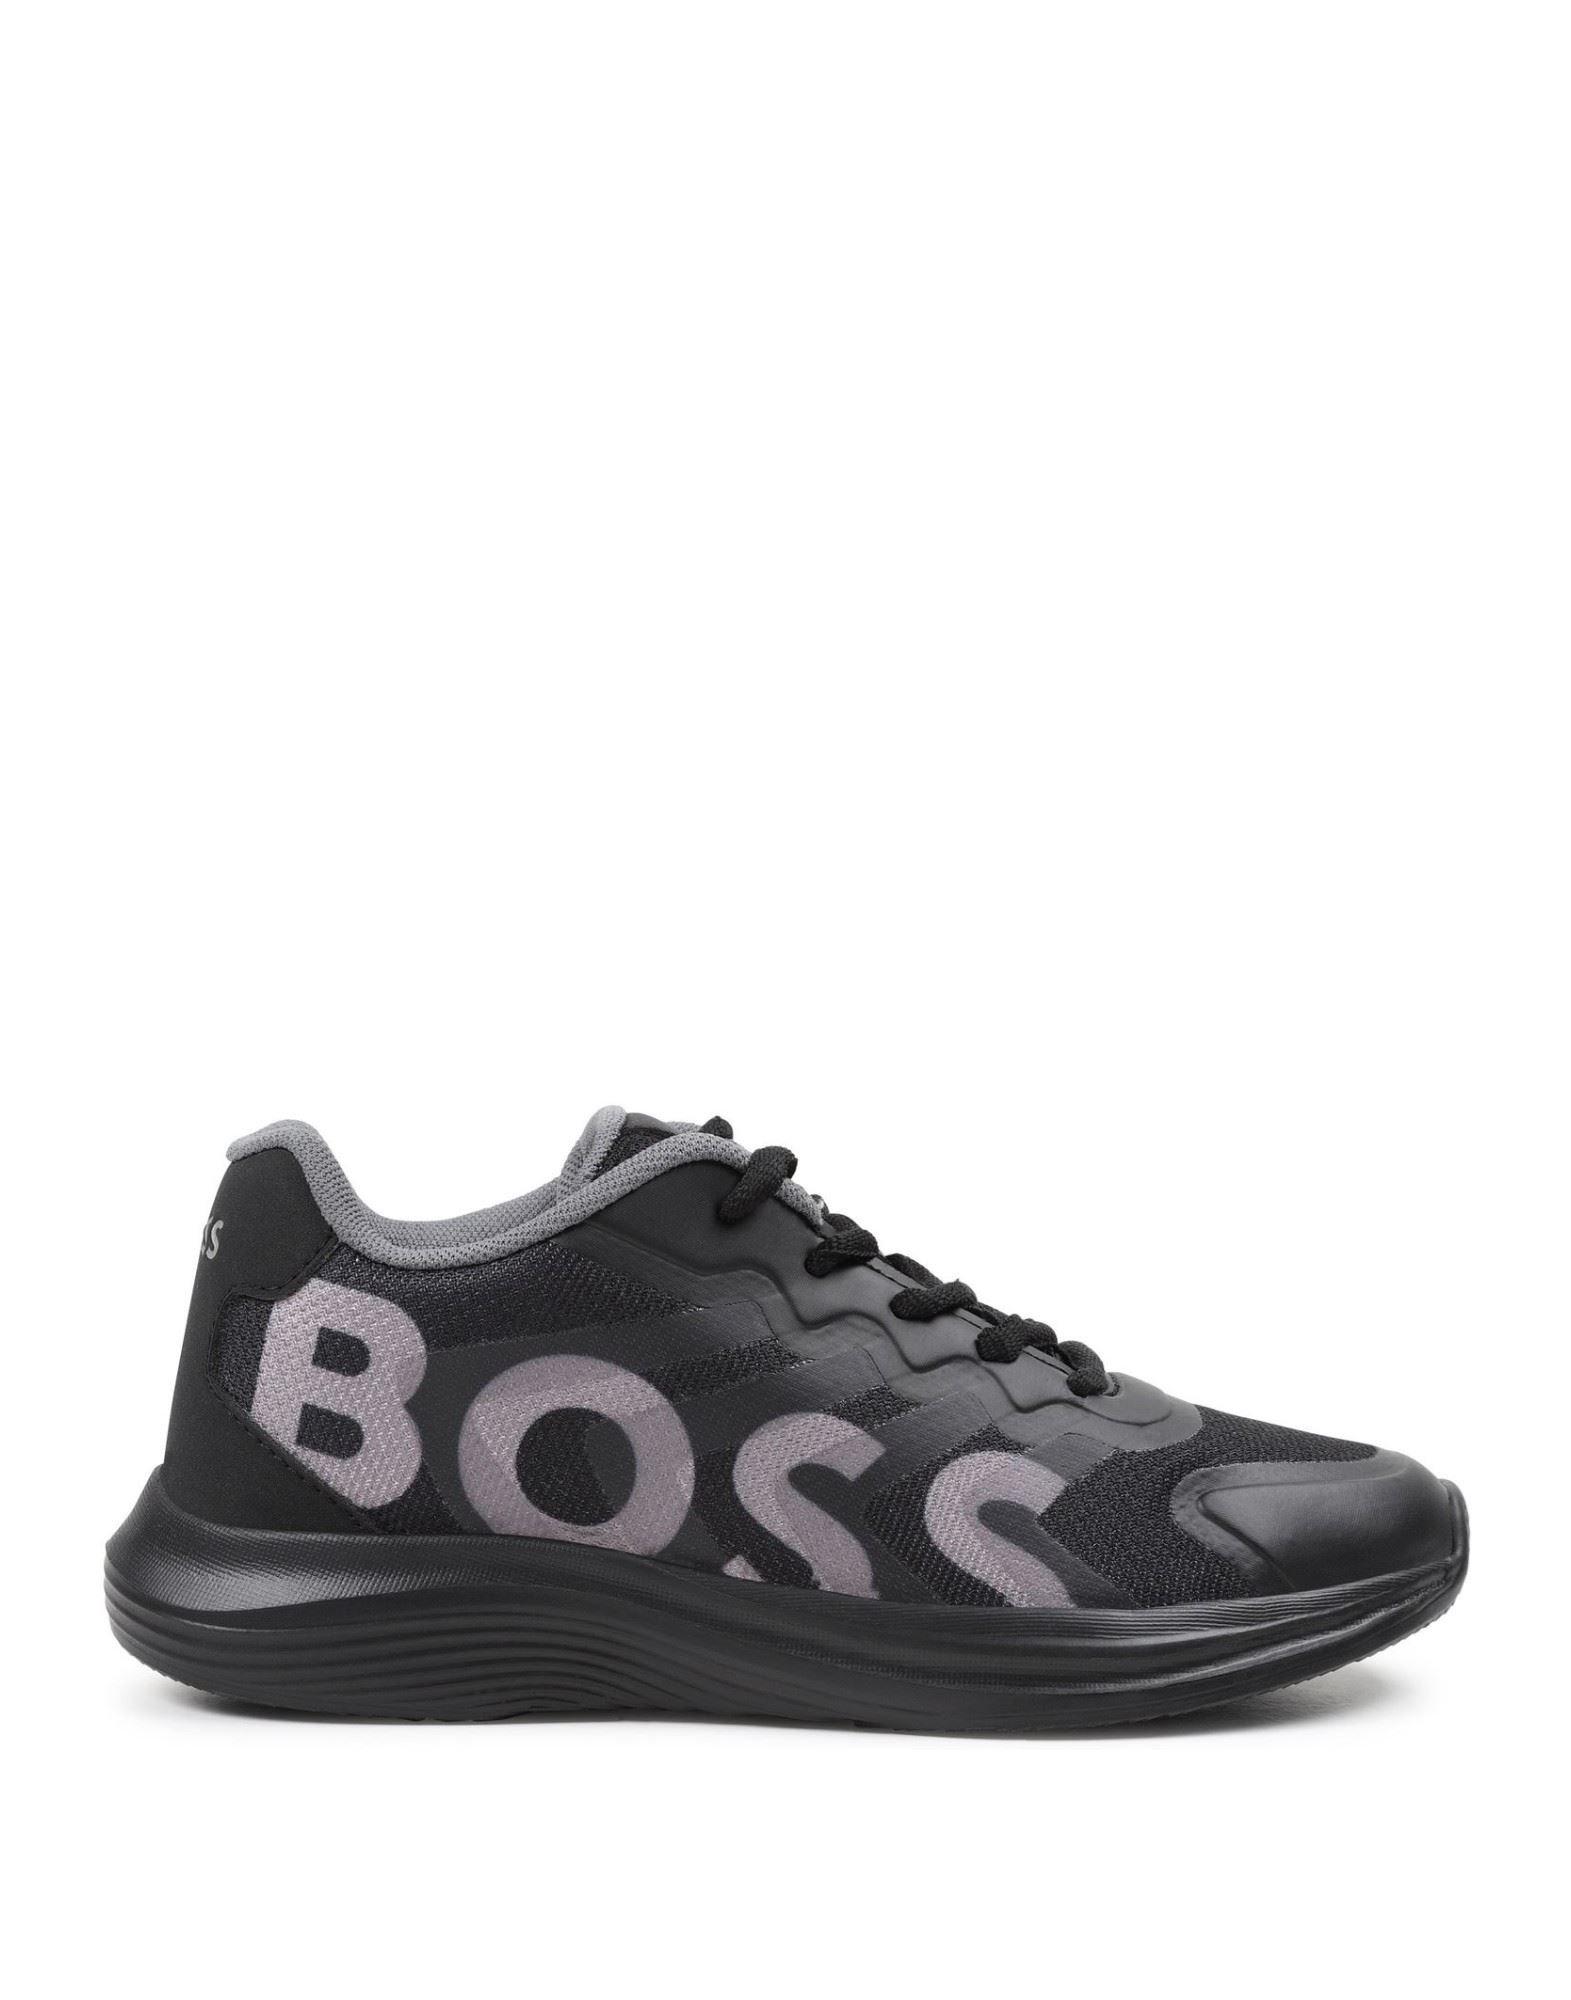 BOSS Sneakers Kinder Schwarz von BOSS